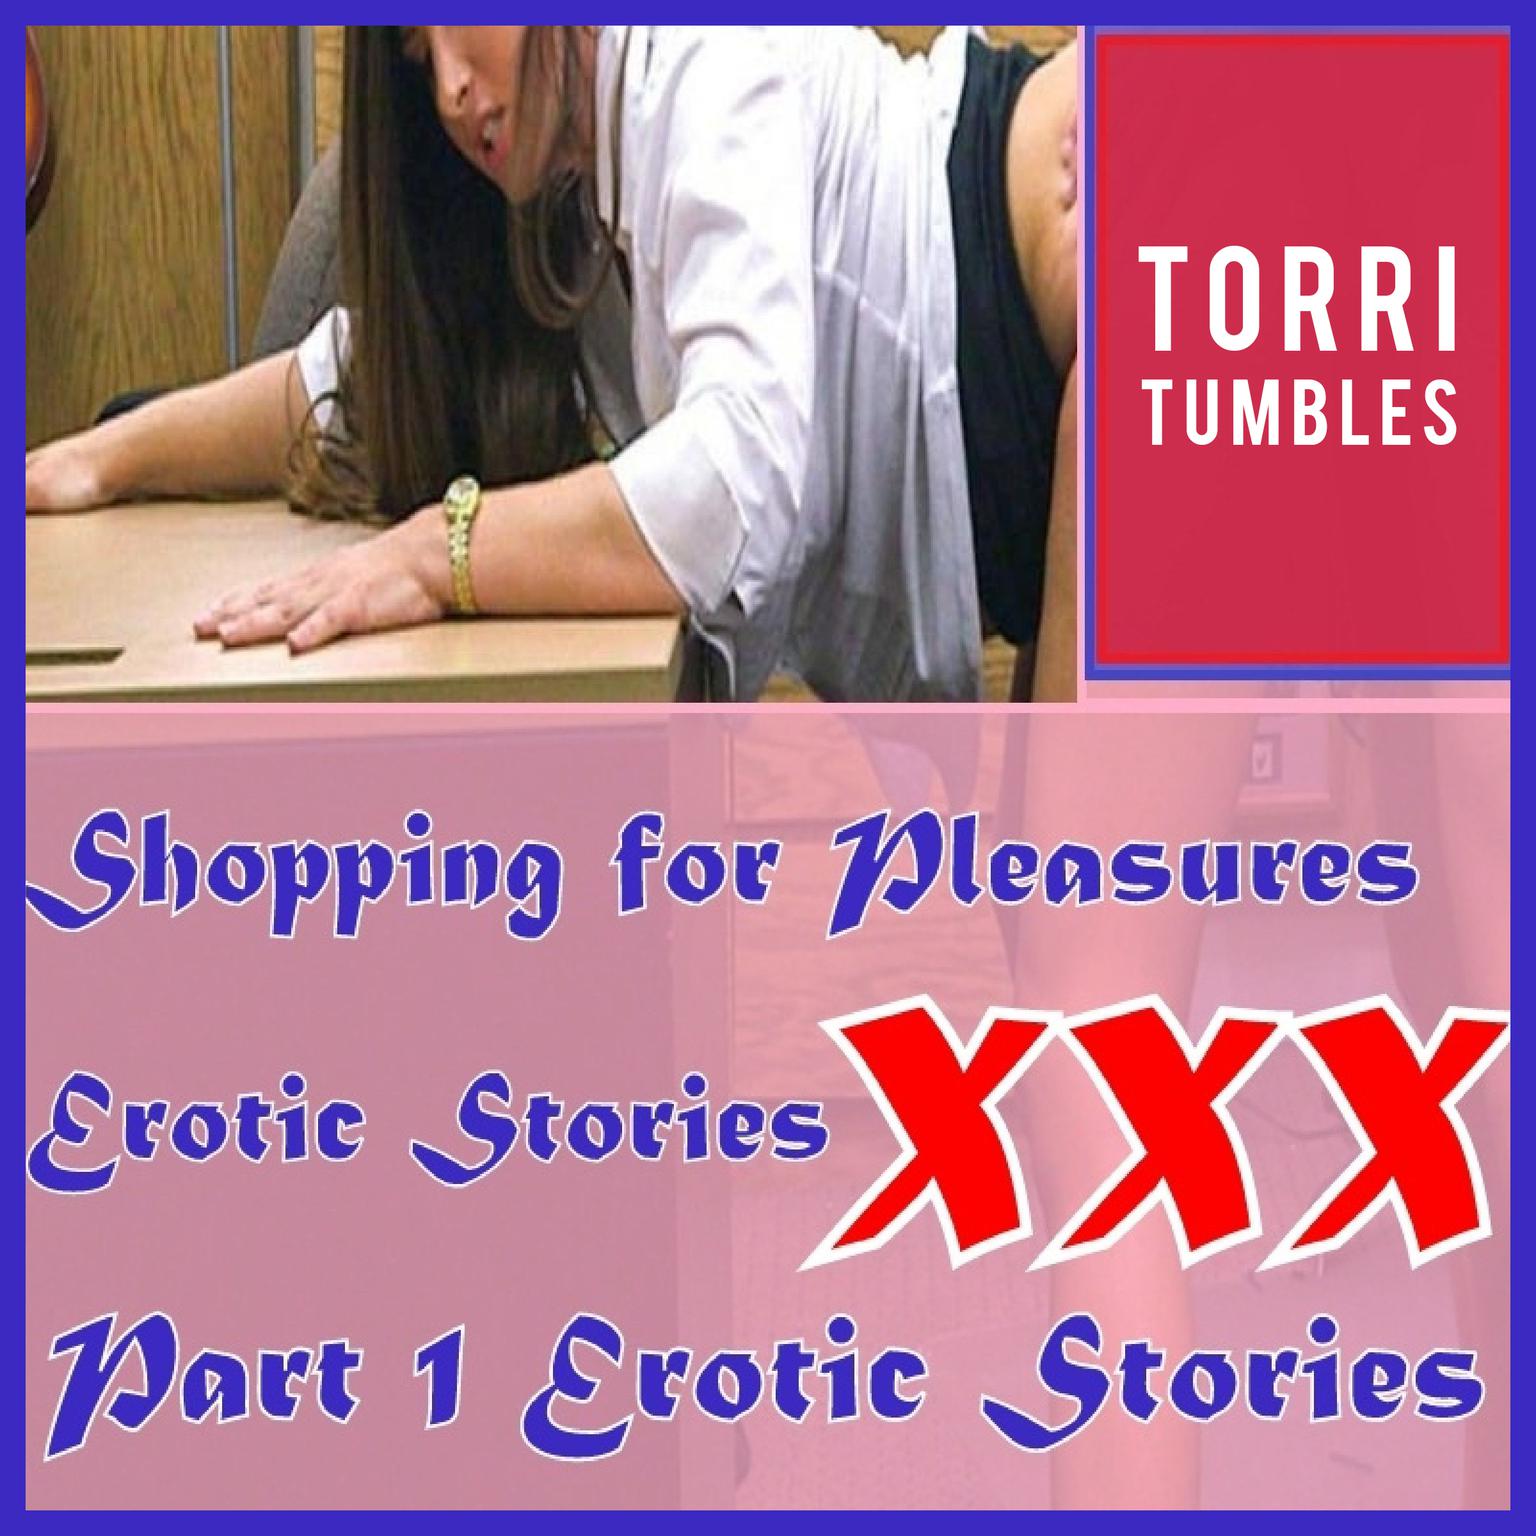 Shopping for Pleasures Erotic Stories  XXX Part 1 Erotic Stories  Audiobook, by Torri Tumbles